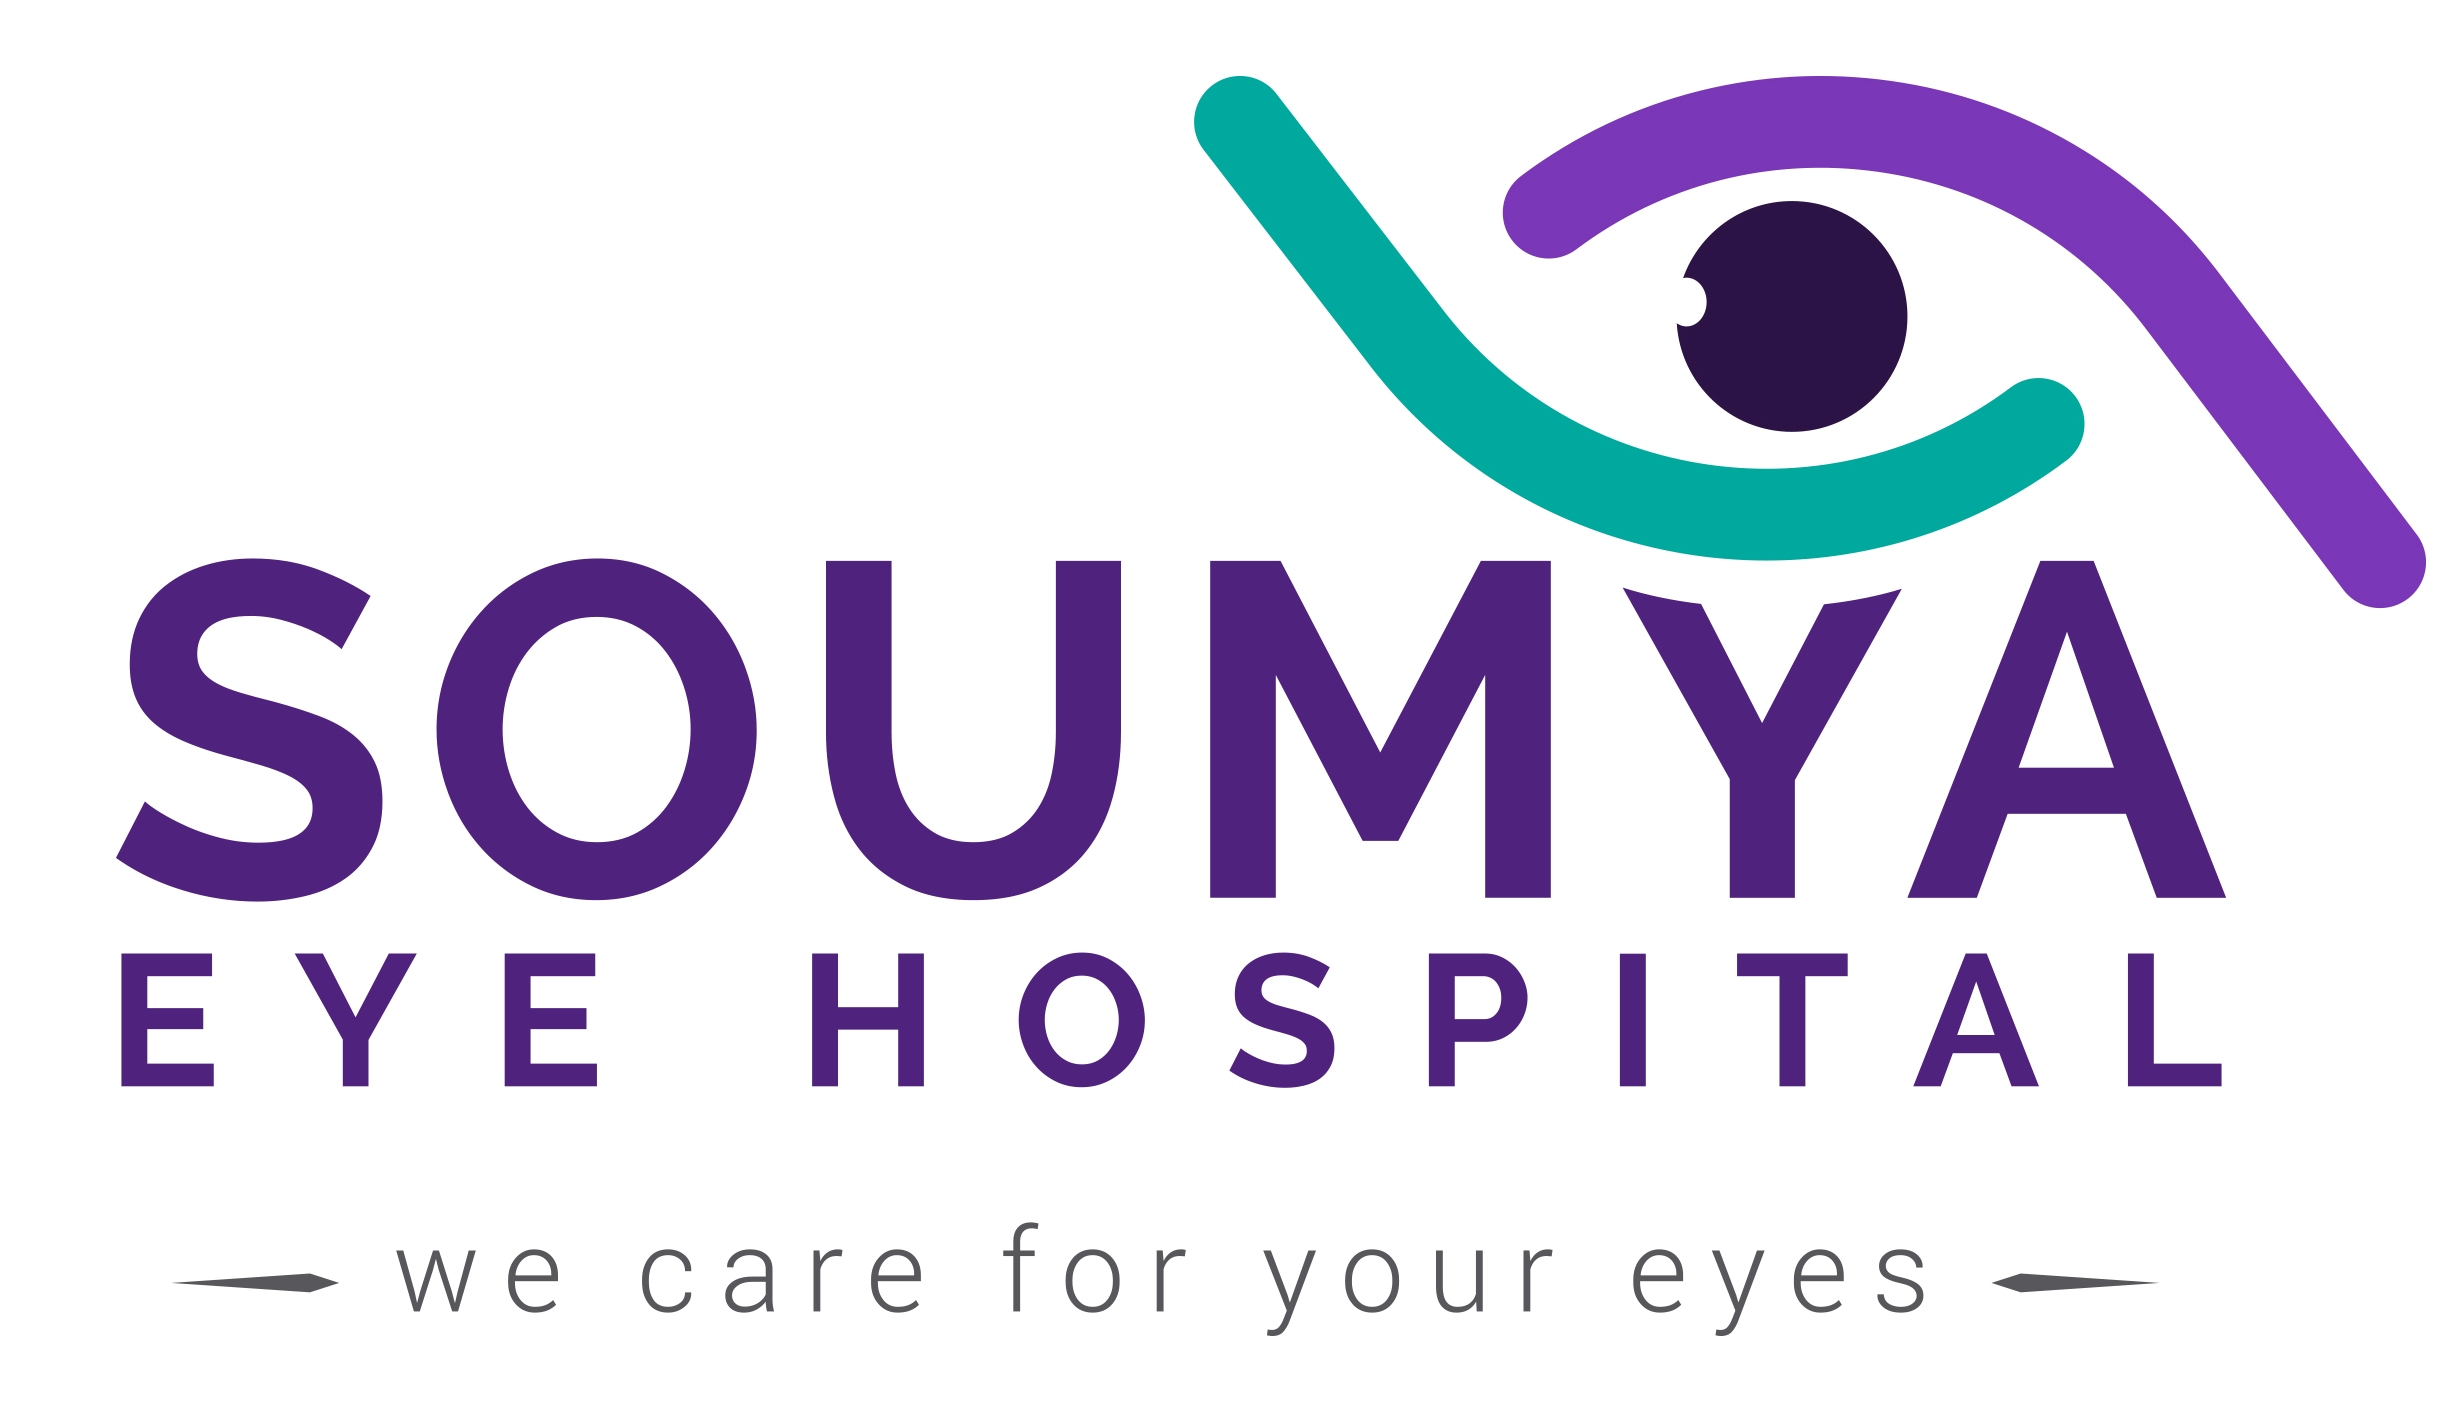 Soumya Eye Hospital|Diagnostic centre|Medical Services